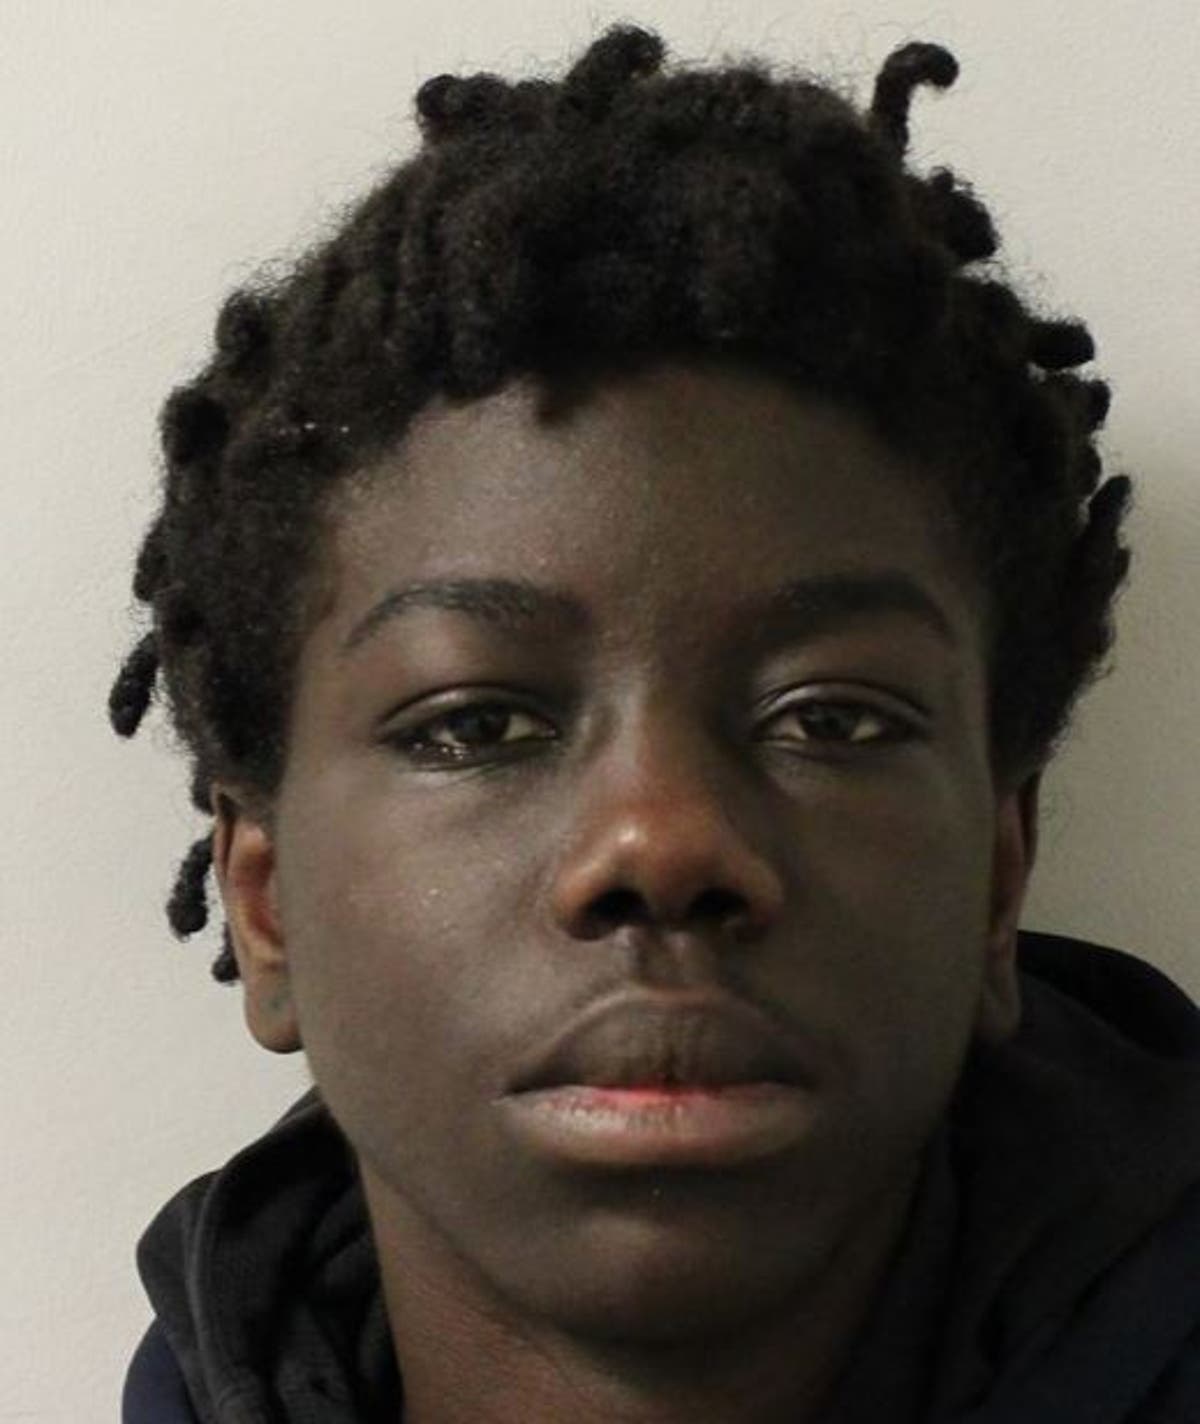 Tottenham murder: Teen guilty of killing 18-year-old moped rider with shotgun blast